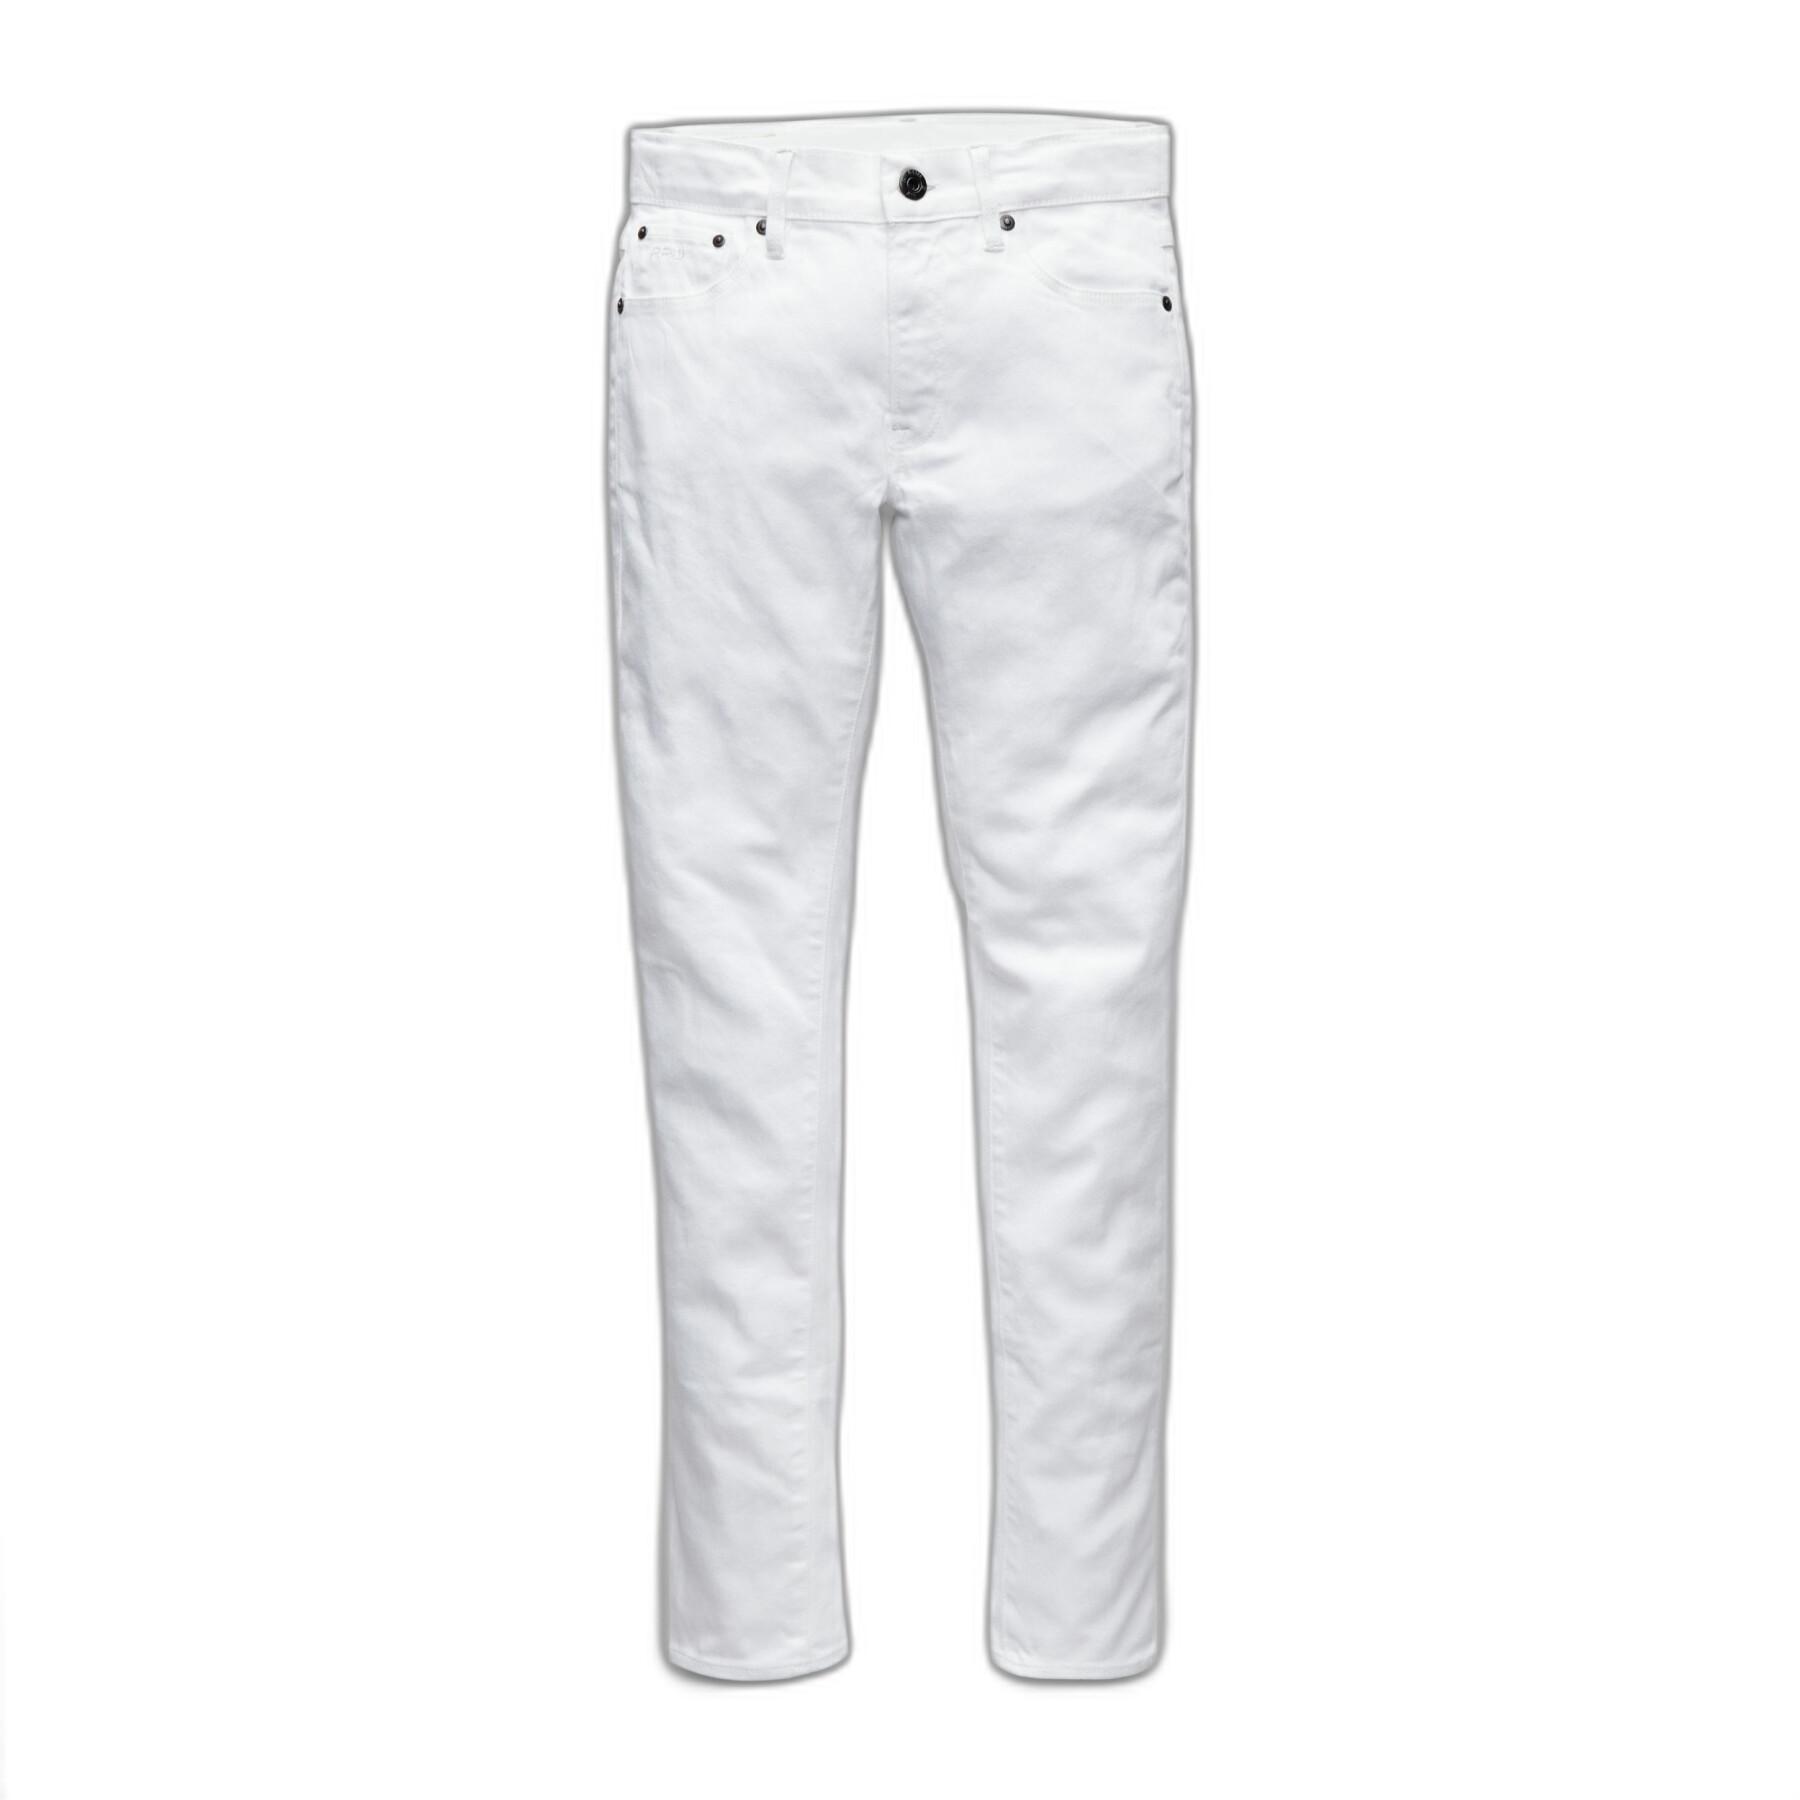 Jeans skinny enfant G-Star Ss22157 D-staq